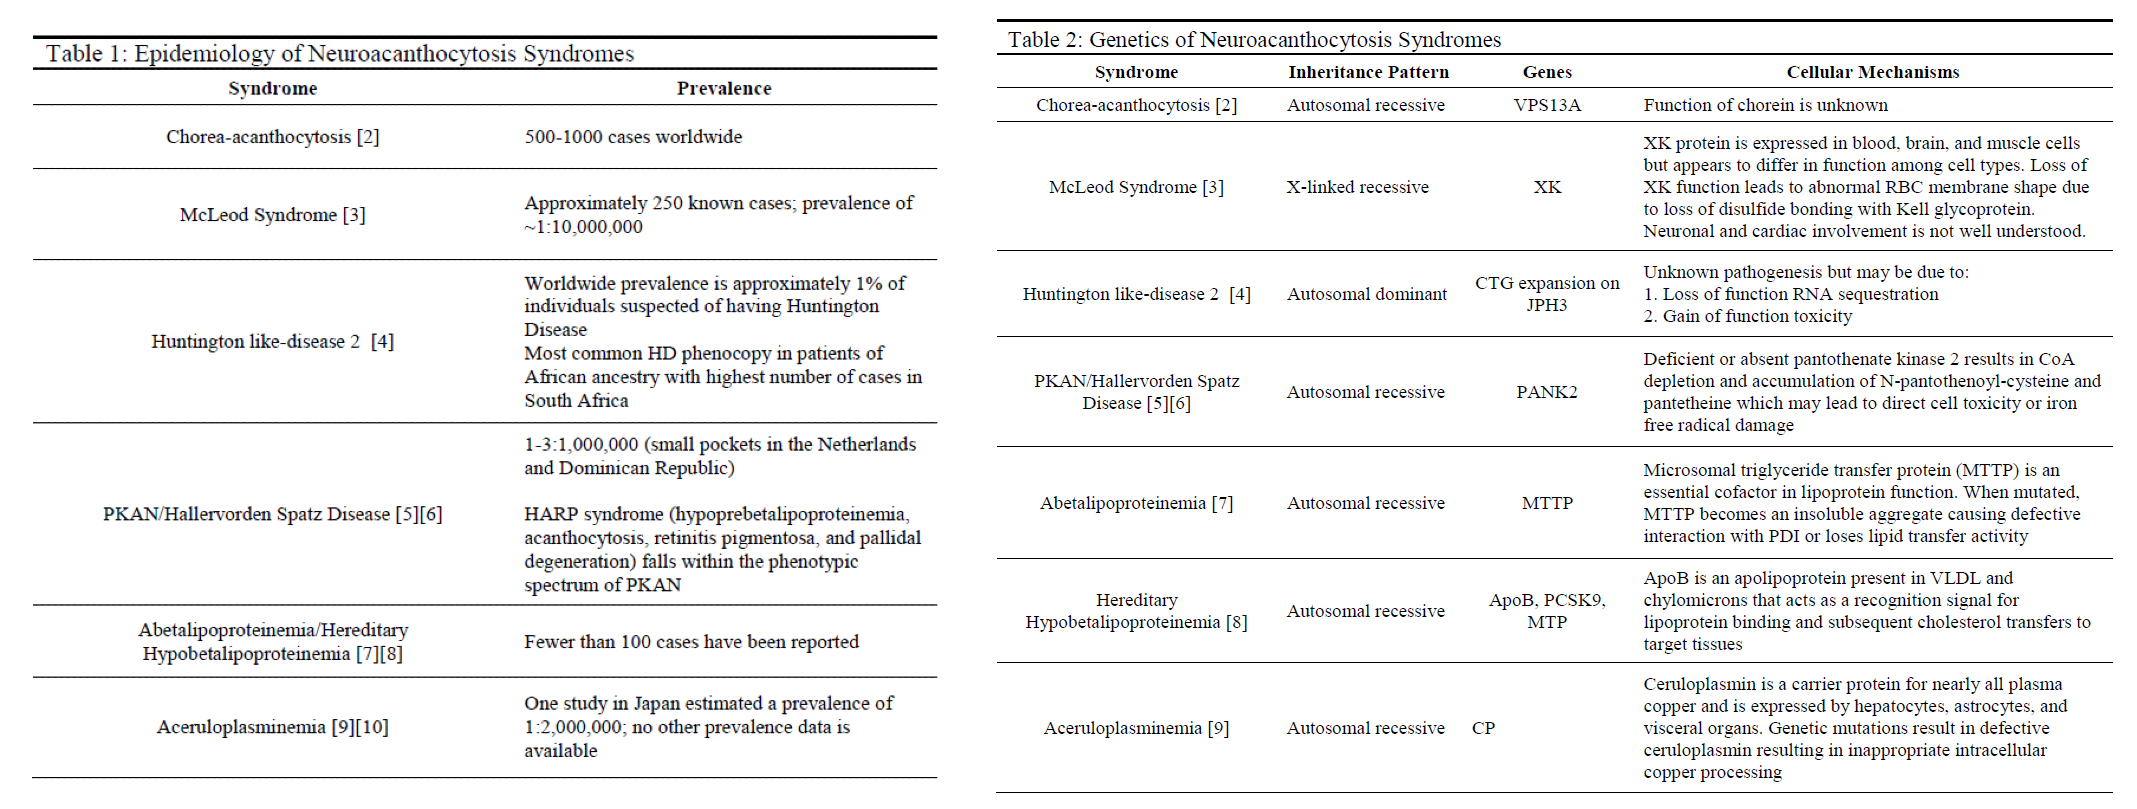 Table 1: Epidemiology of Neuroacanthocytosis Syndromes
Table 2: Genetics of Neuroacanthocytosis Syndromes 